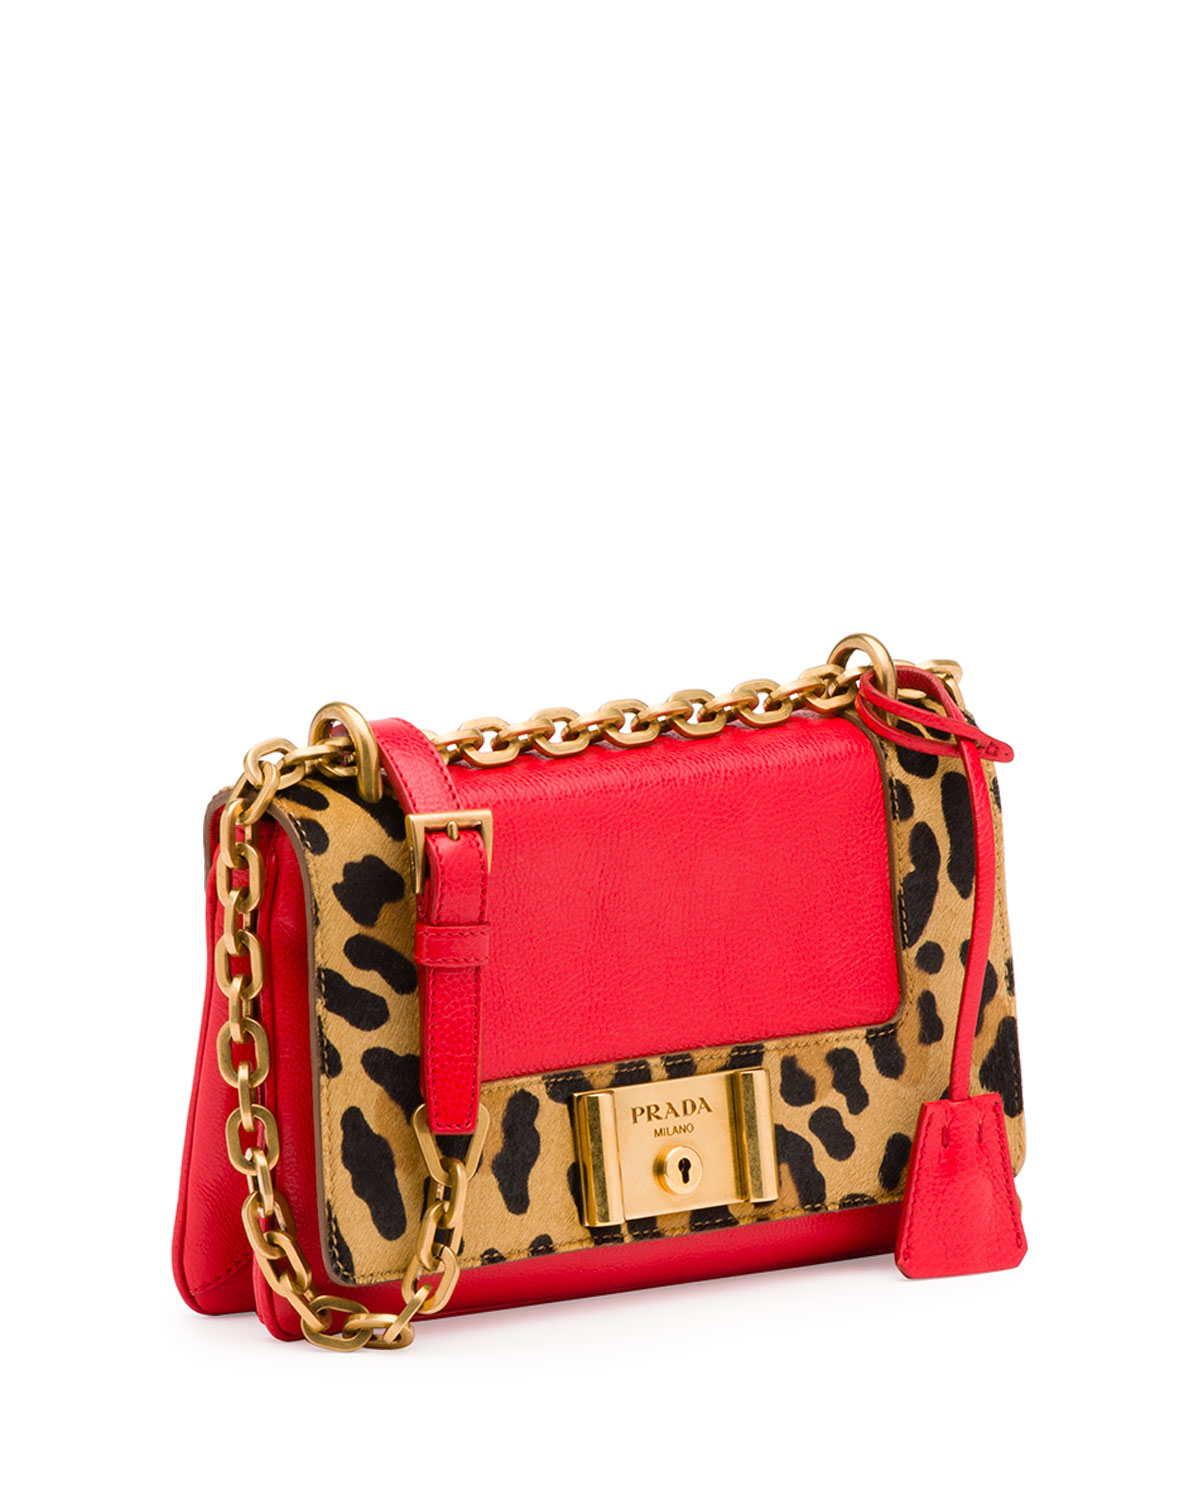 Prada Leopard-Print Chain Shoulder Bag in Red (LACCA + MIELE) | Lyst  